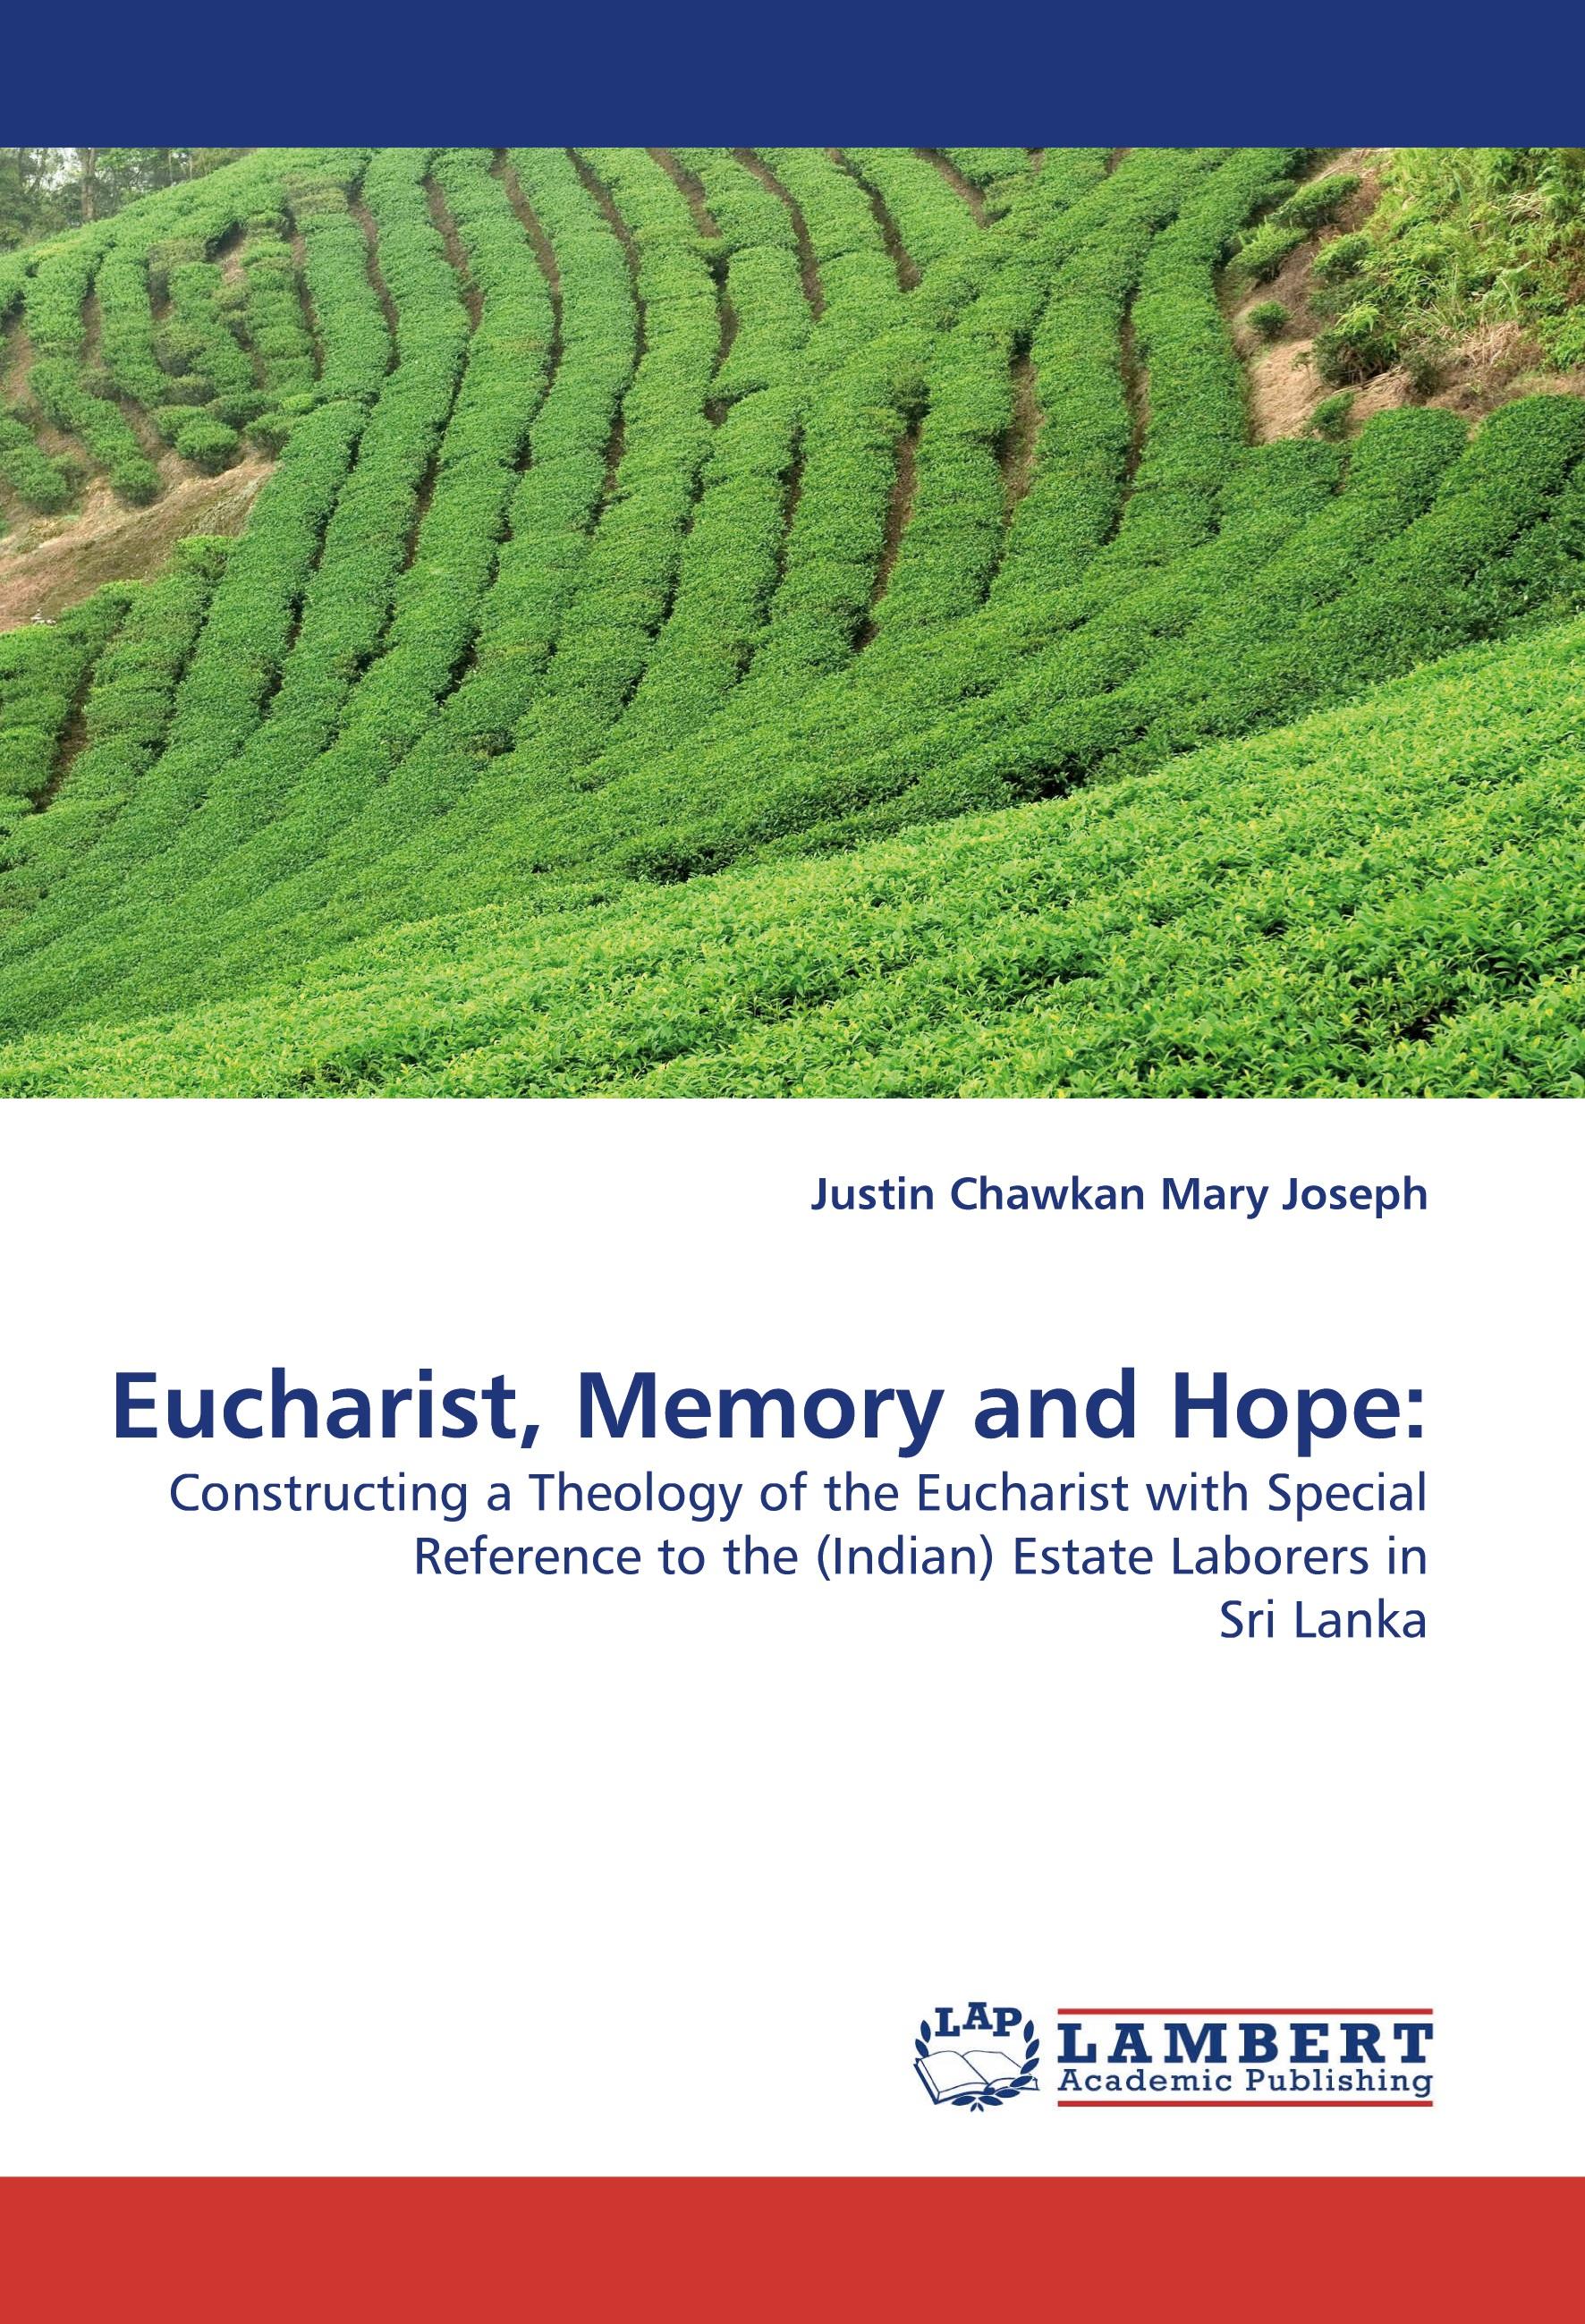 Eucharist, Memory and Hope - Justin Chawkan Mary Joseph